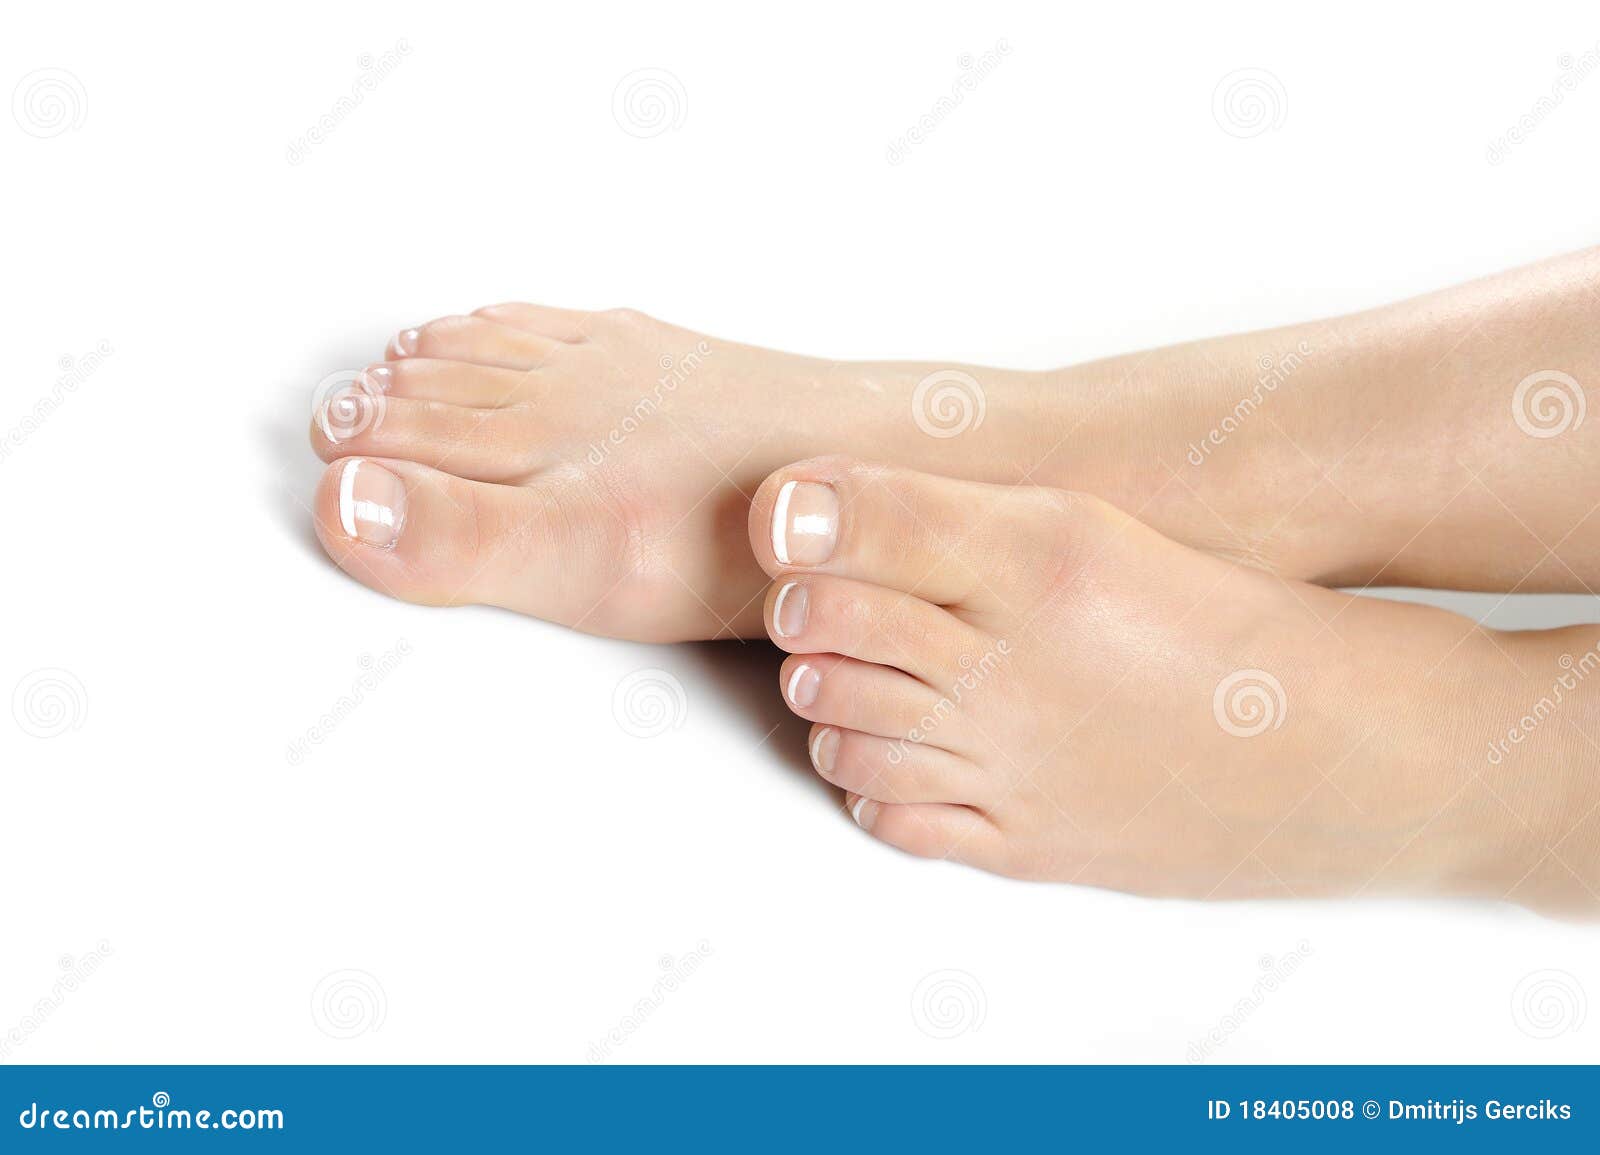 Perfect Feet Pics